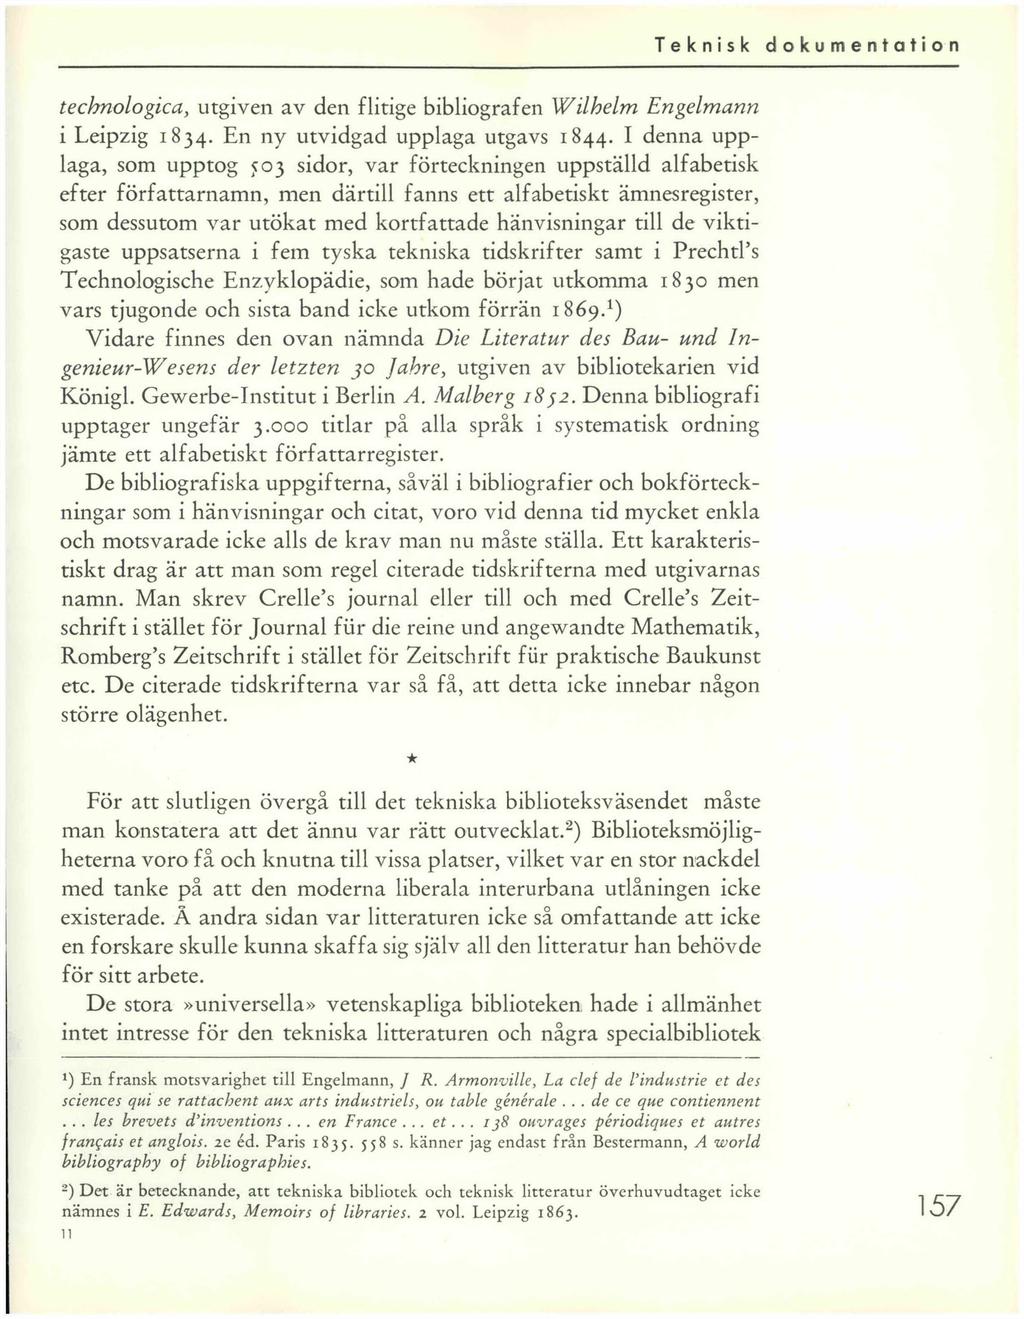 technologica, utgiven av den flitige bibliografen Wilhelm Engelmann i Leipzig 1834. En ny utvidgad upplaga utgavs 1844.